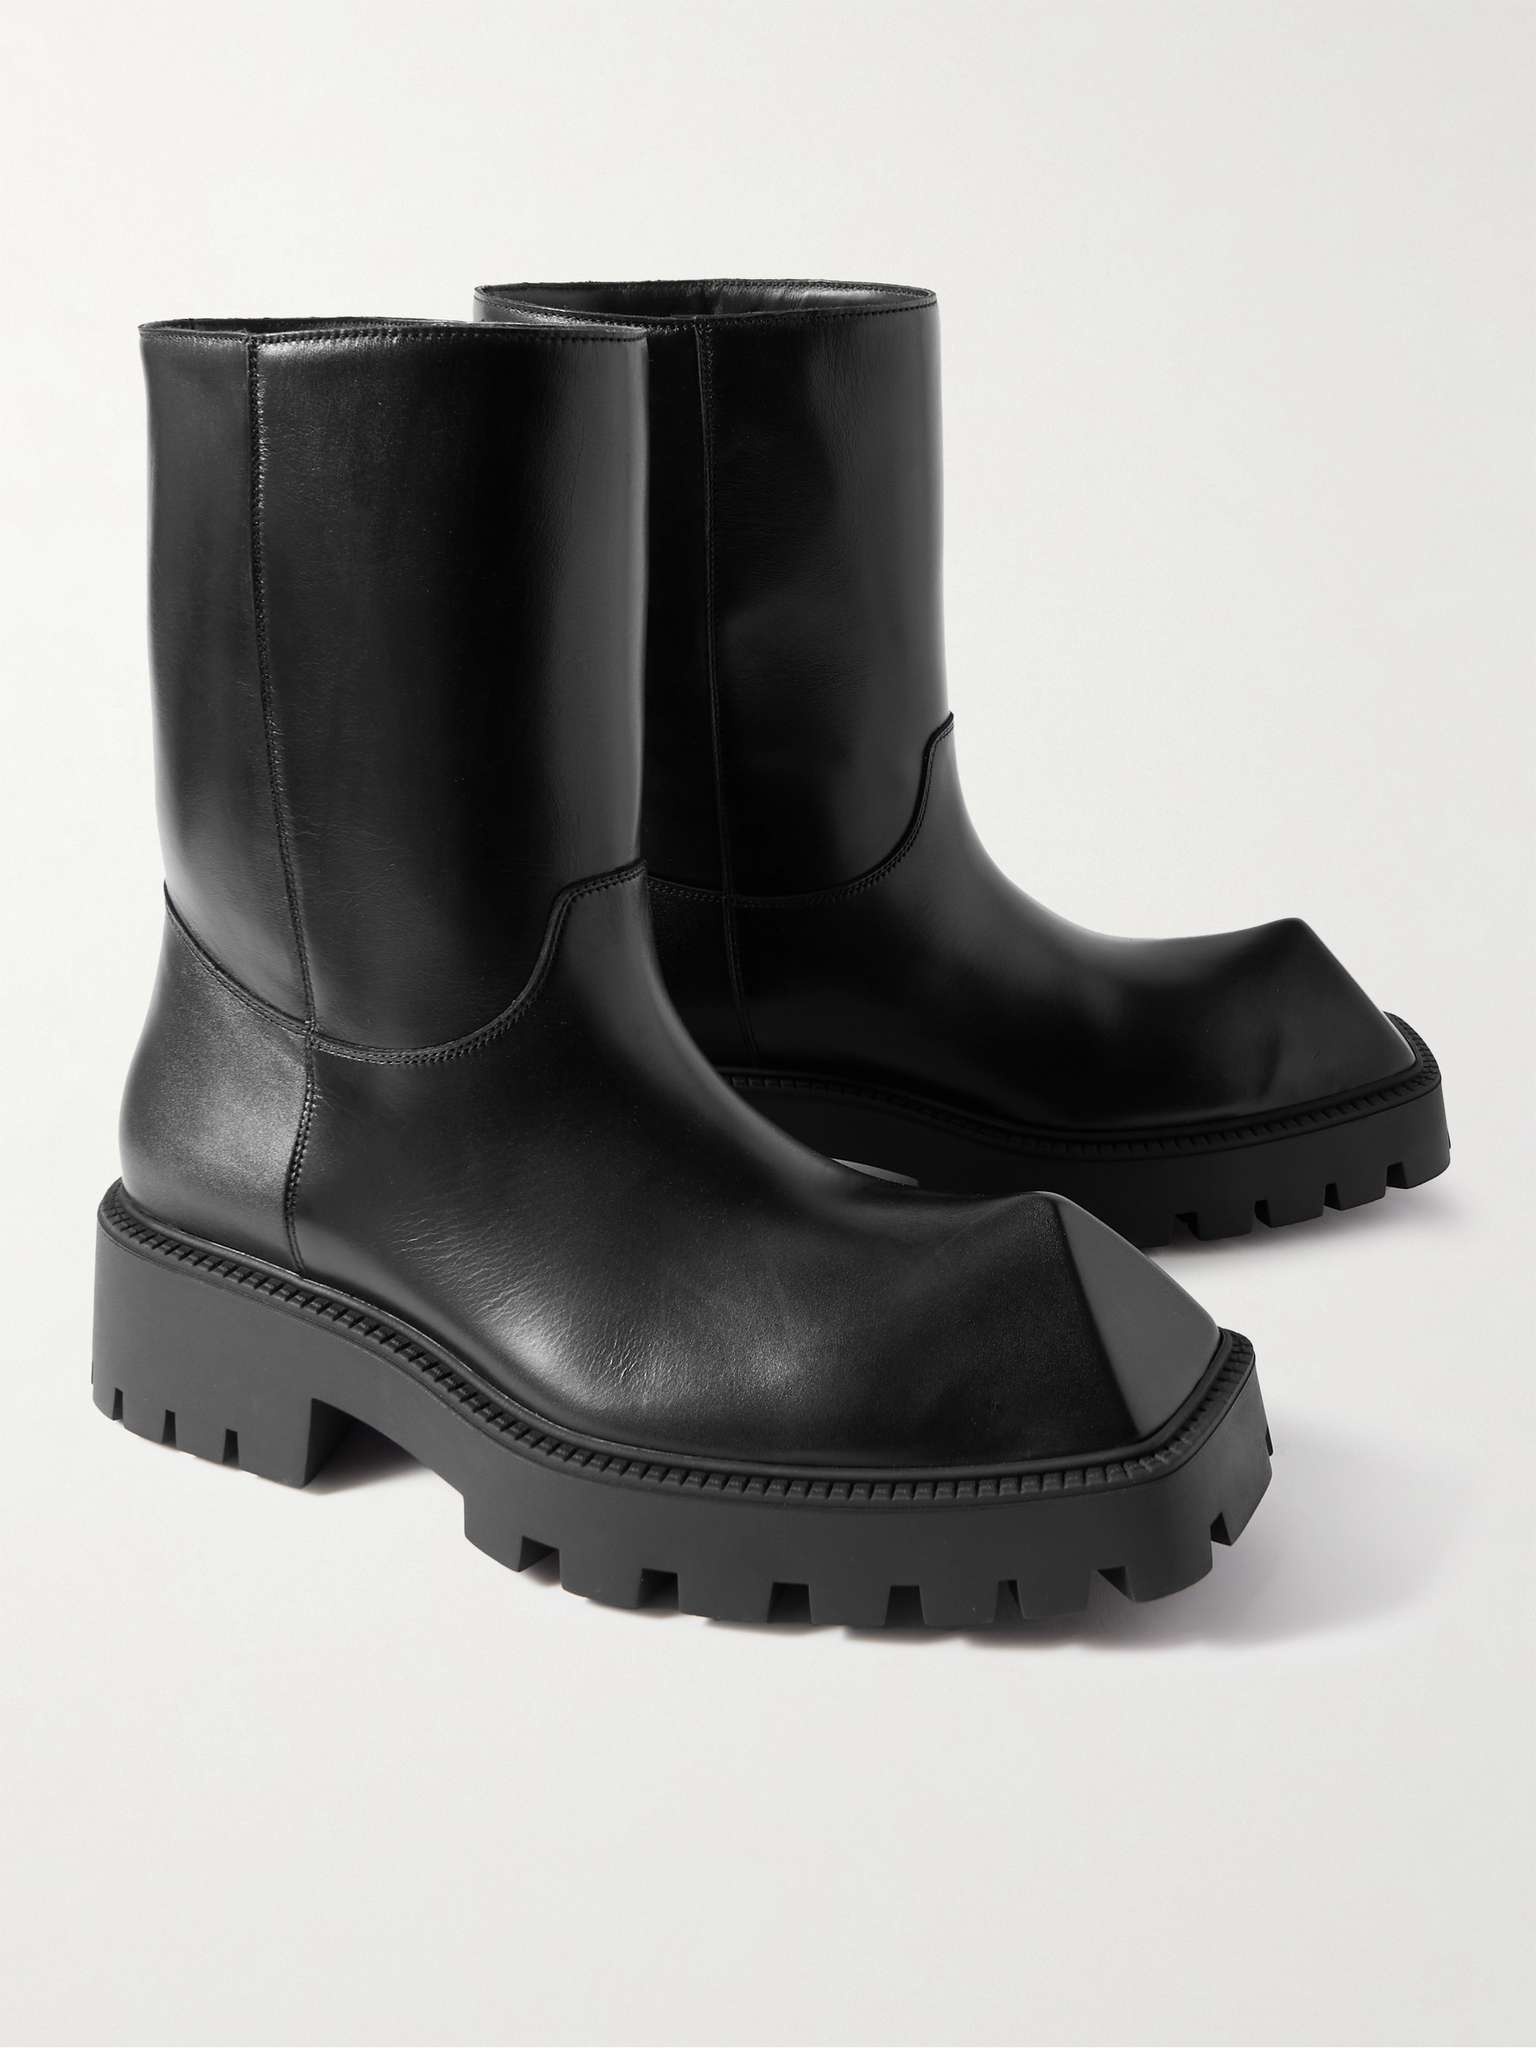 Rhino Leather Boots - 3